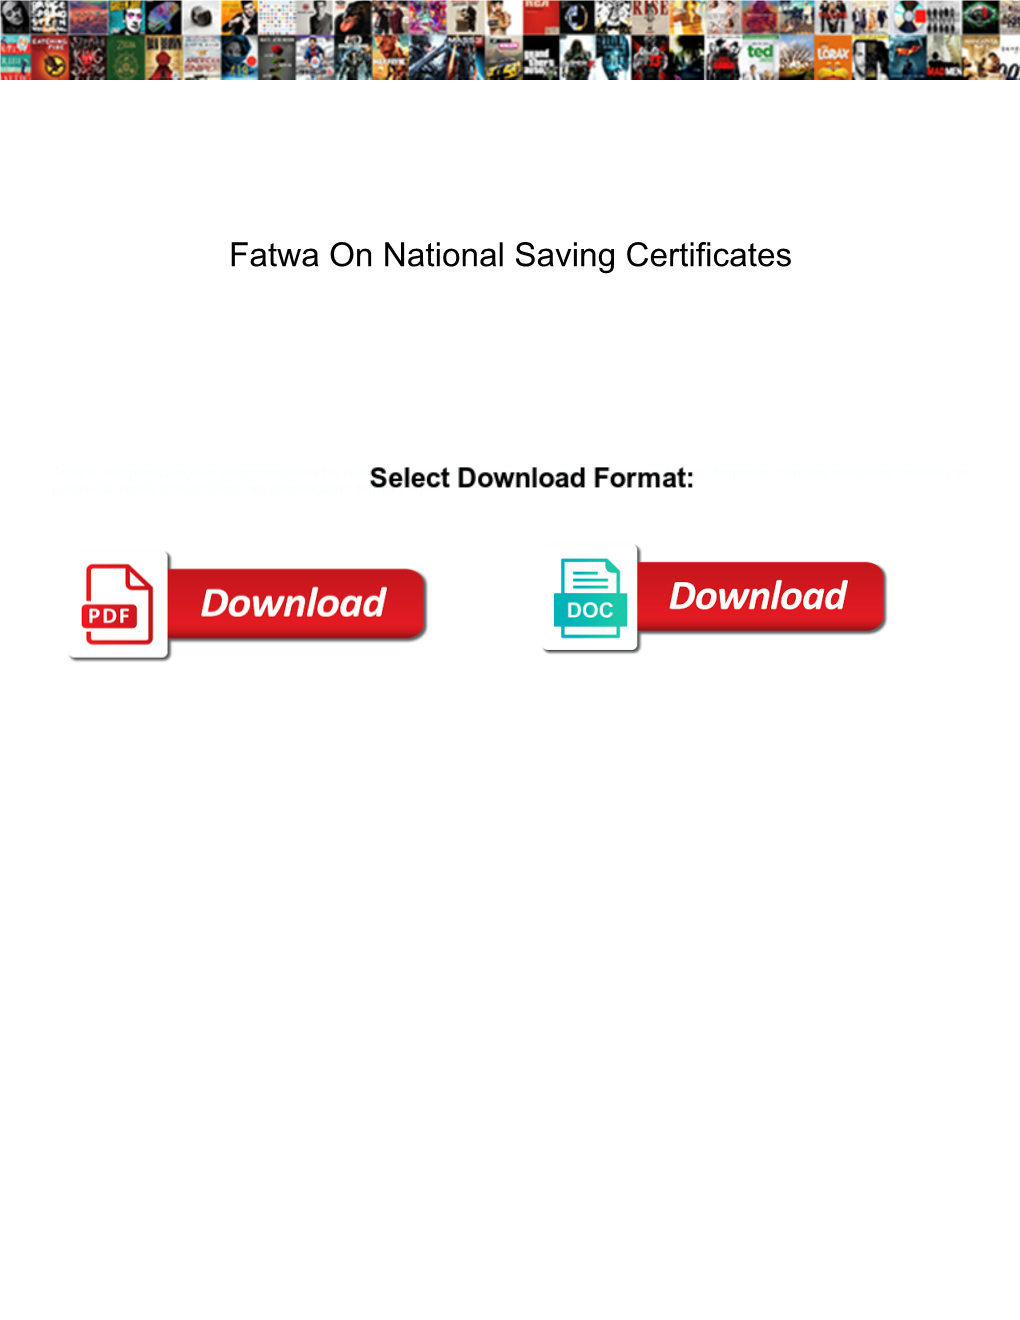 Fatwa on National Saving Certificates